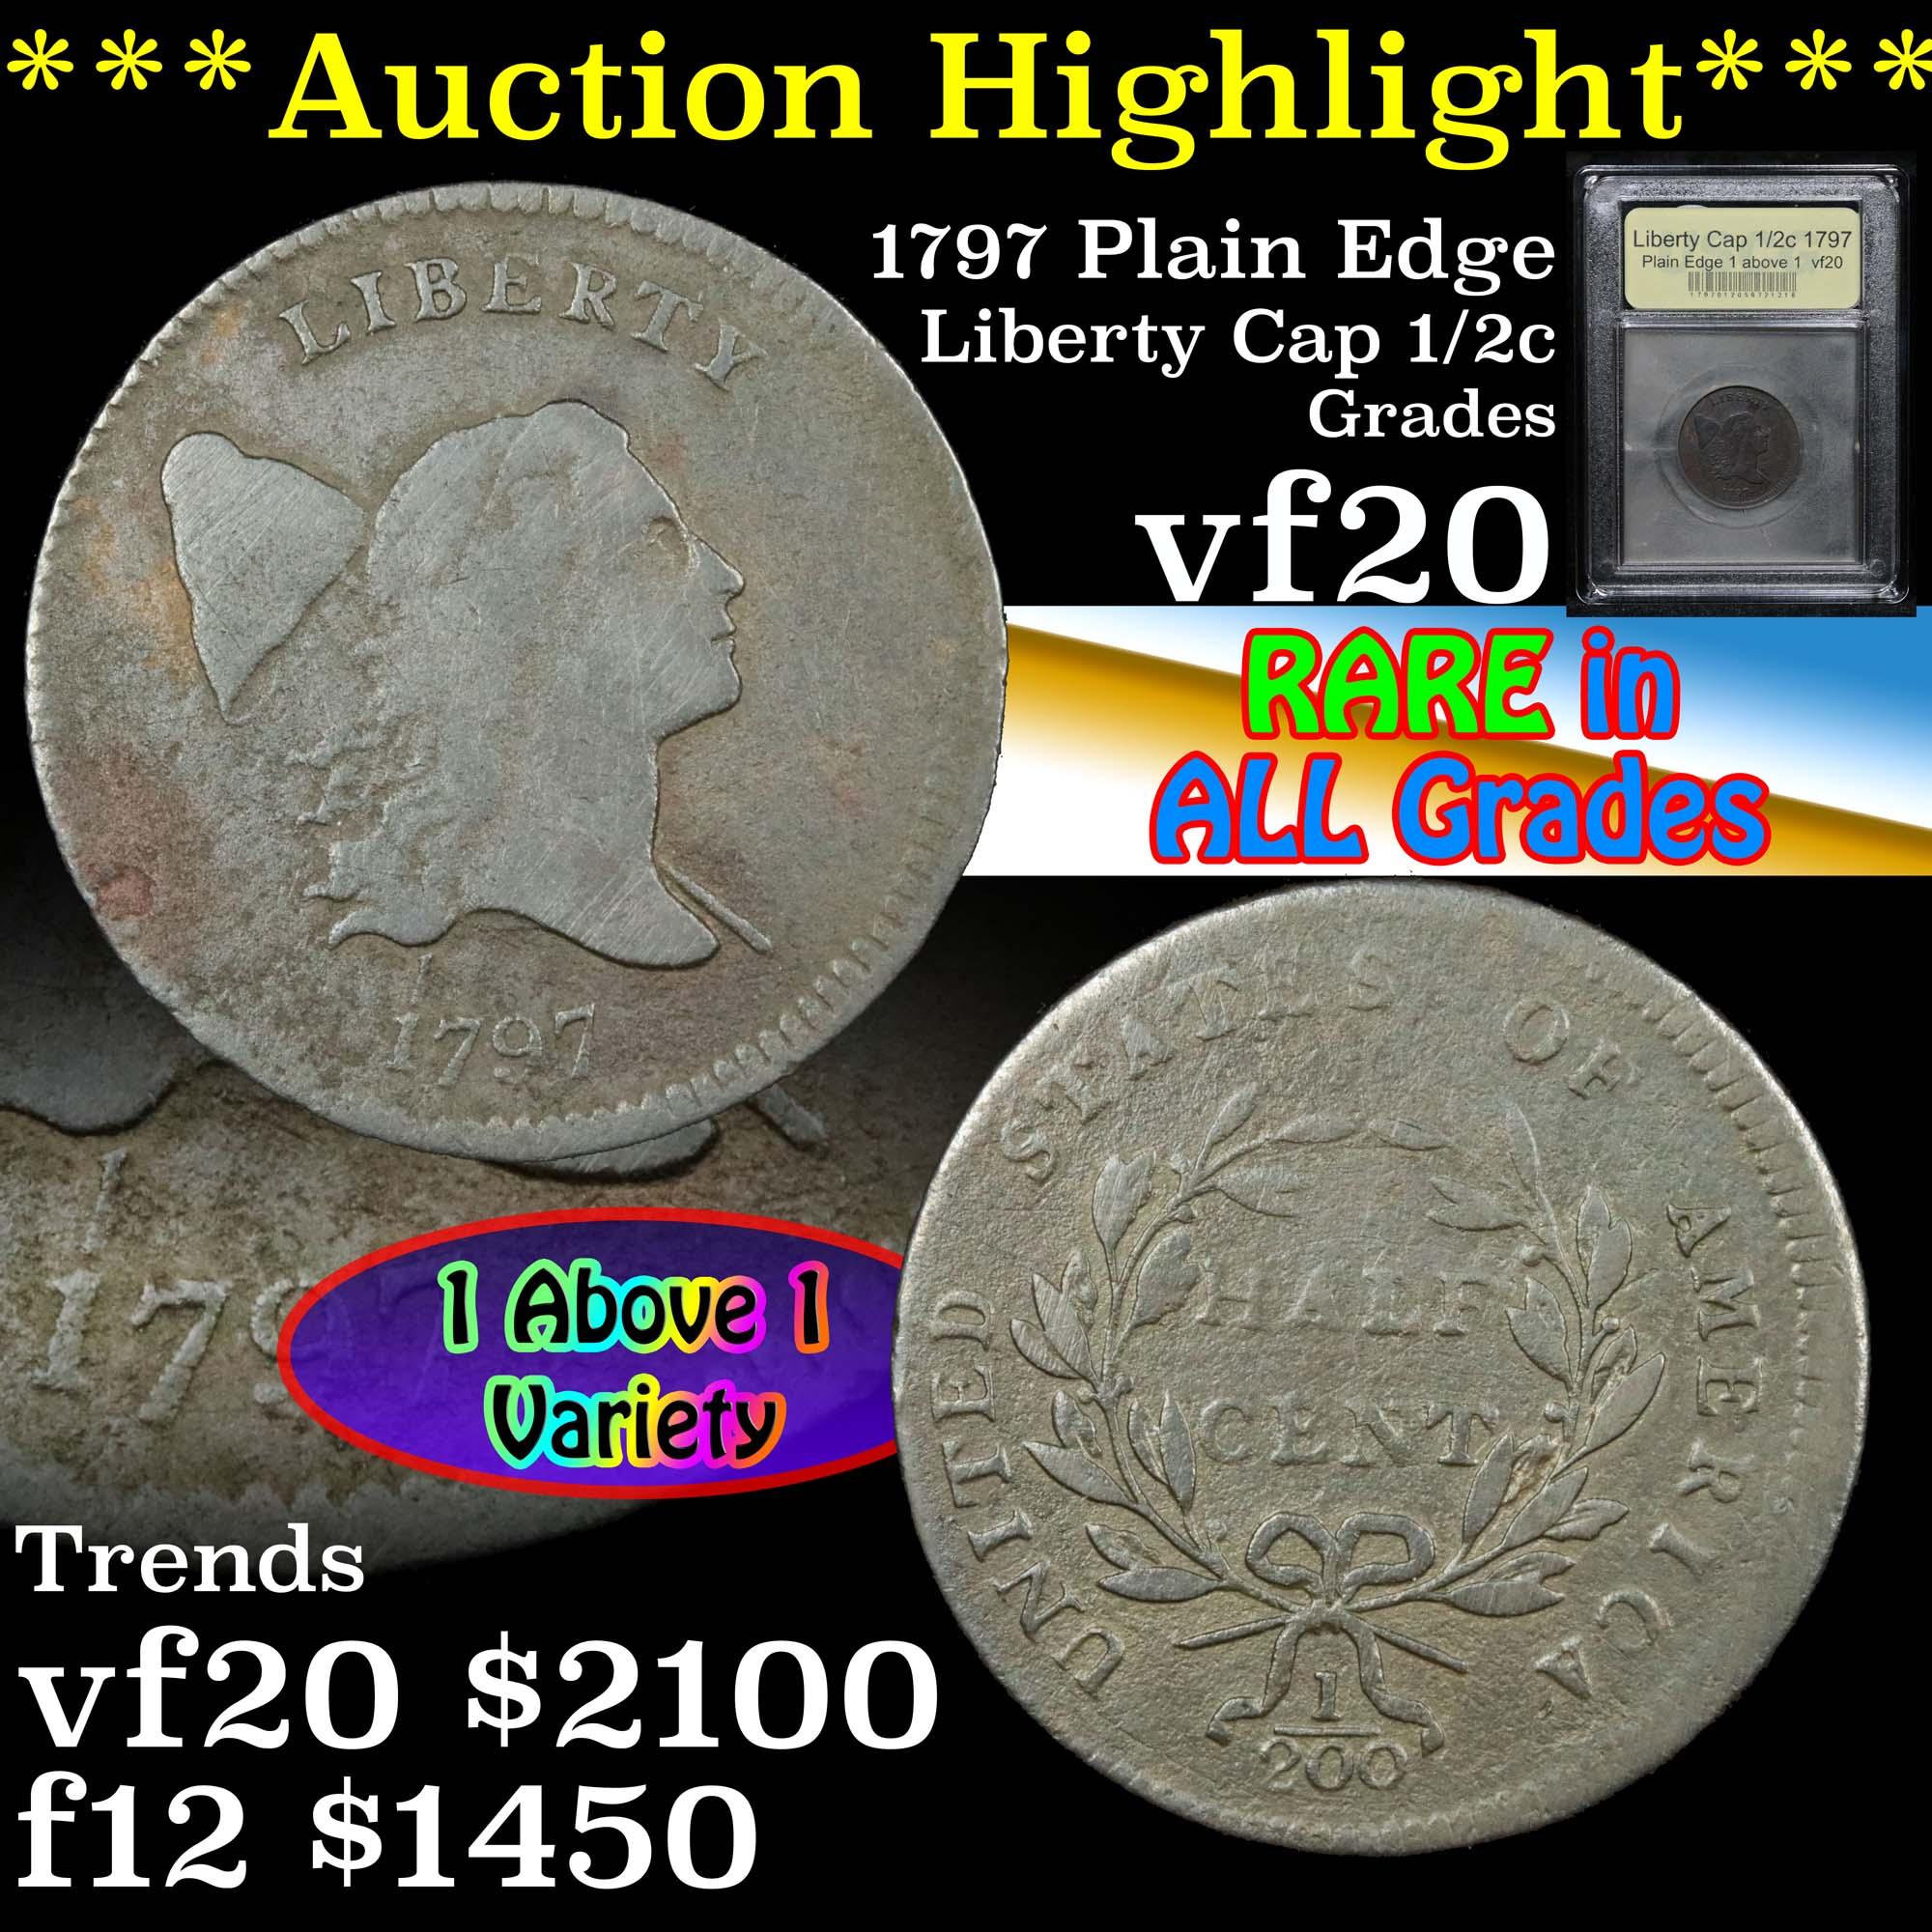 ***Auction Highlight*** 1797 Plain Edge 1 above 1 Liberty Cap 1/2c Graded vf, very fine By USCG (fc)